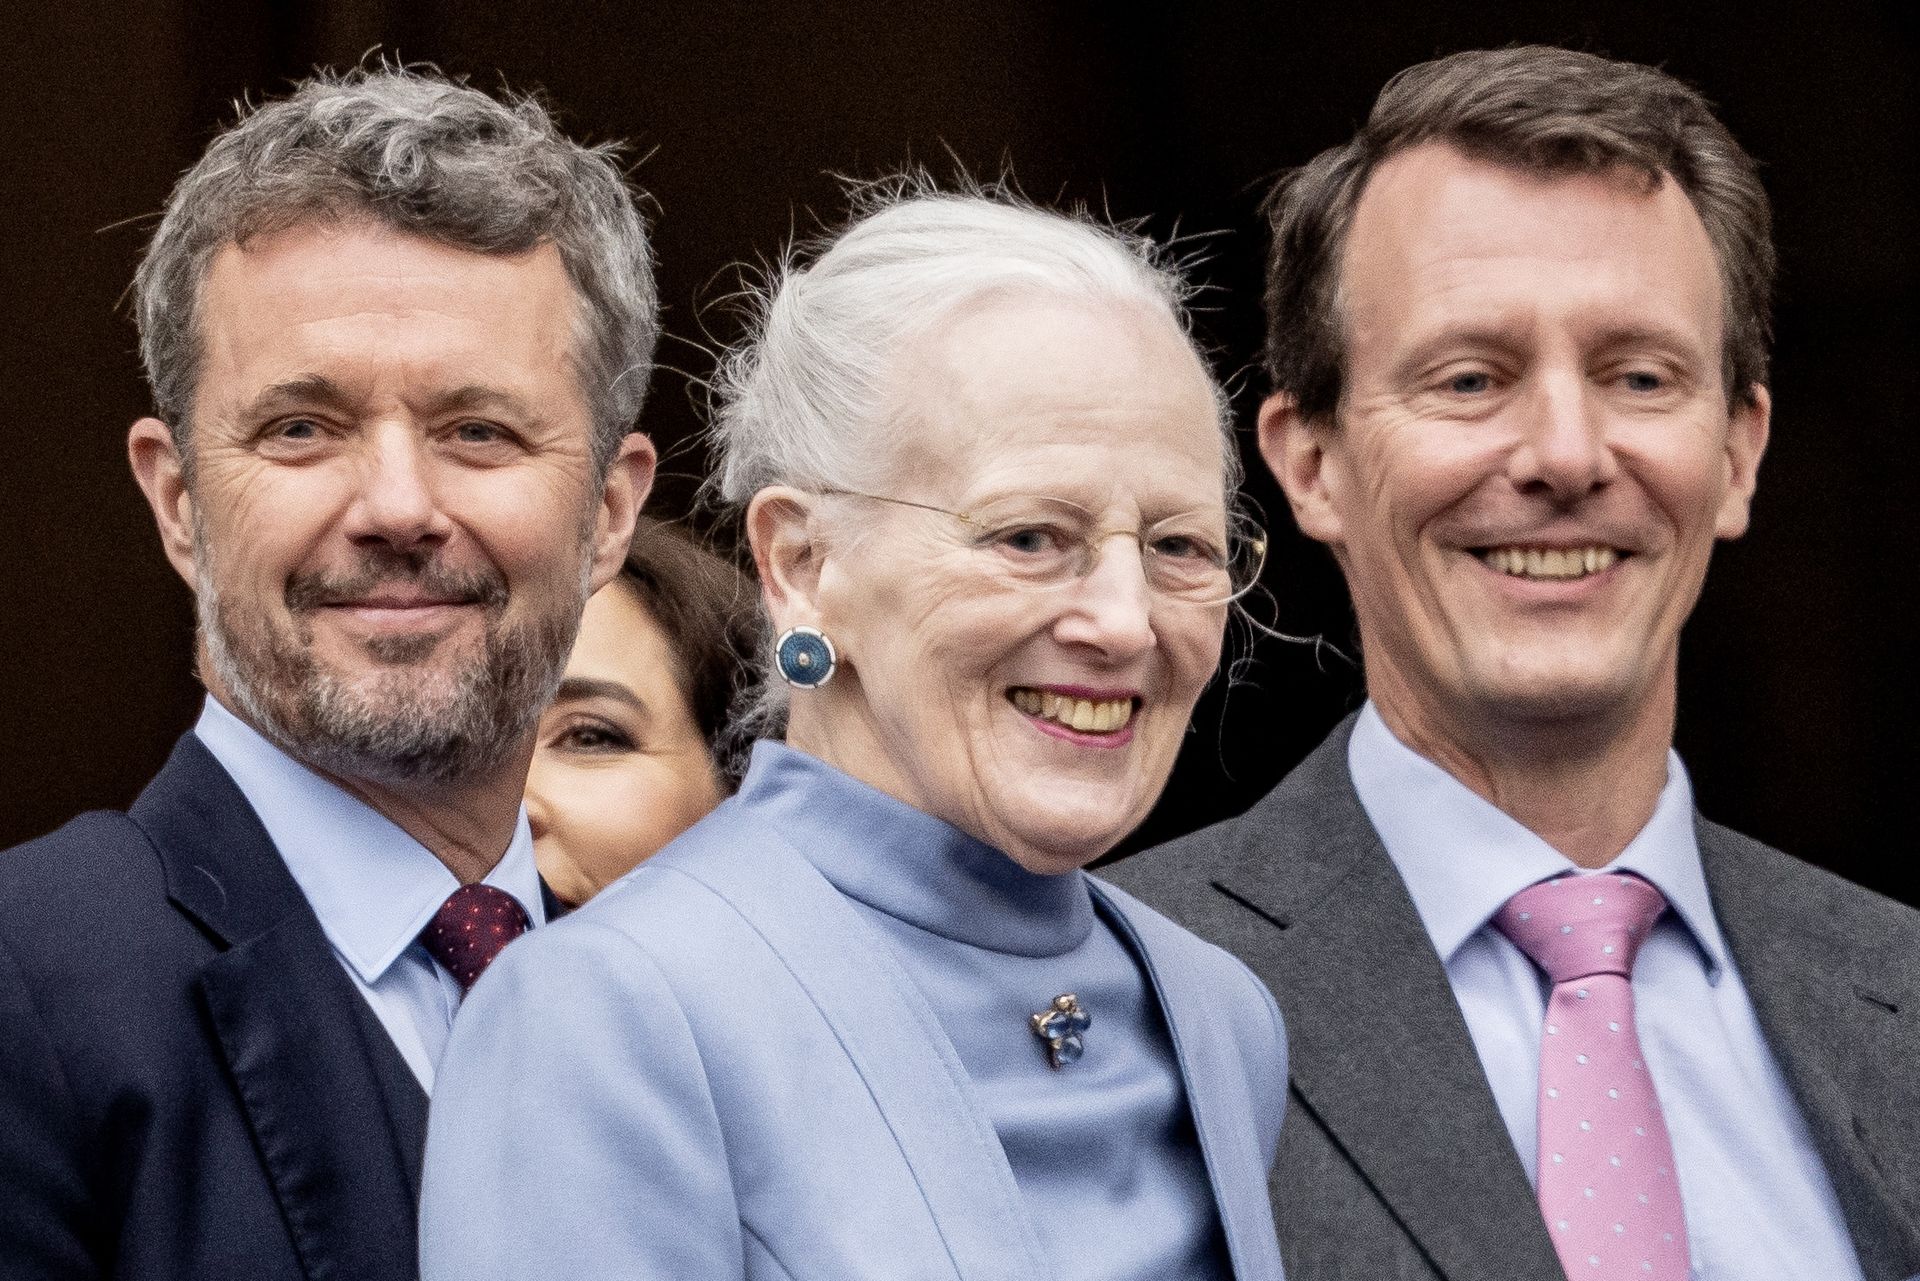 Koningin Margrethe II kroonprins Frederik prins Joachim